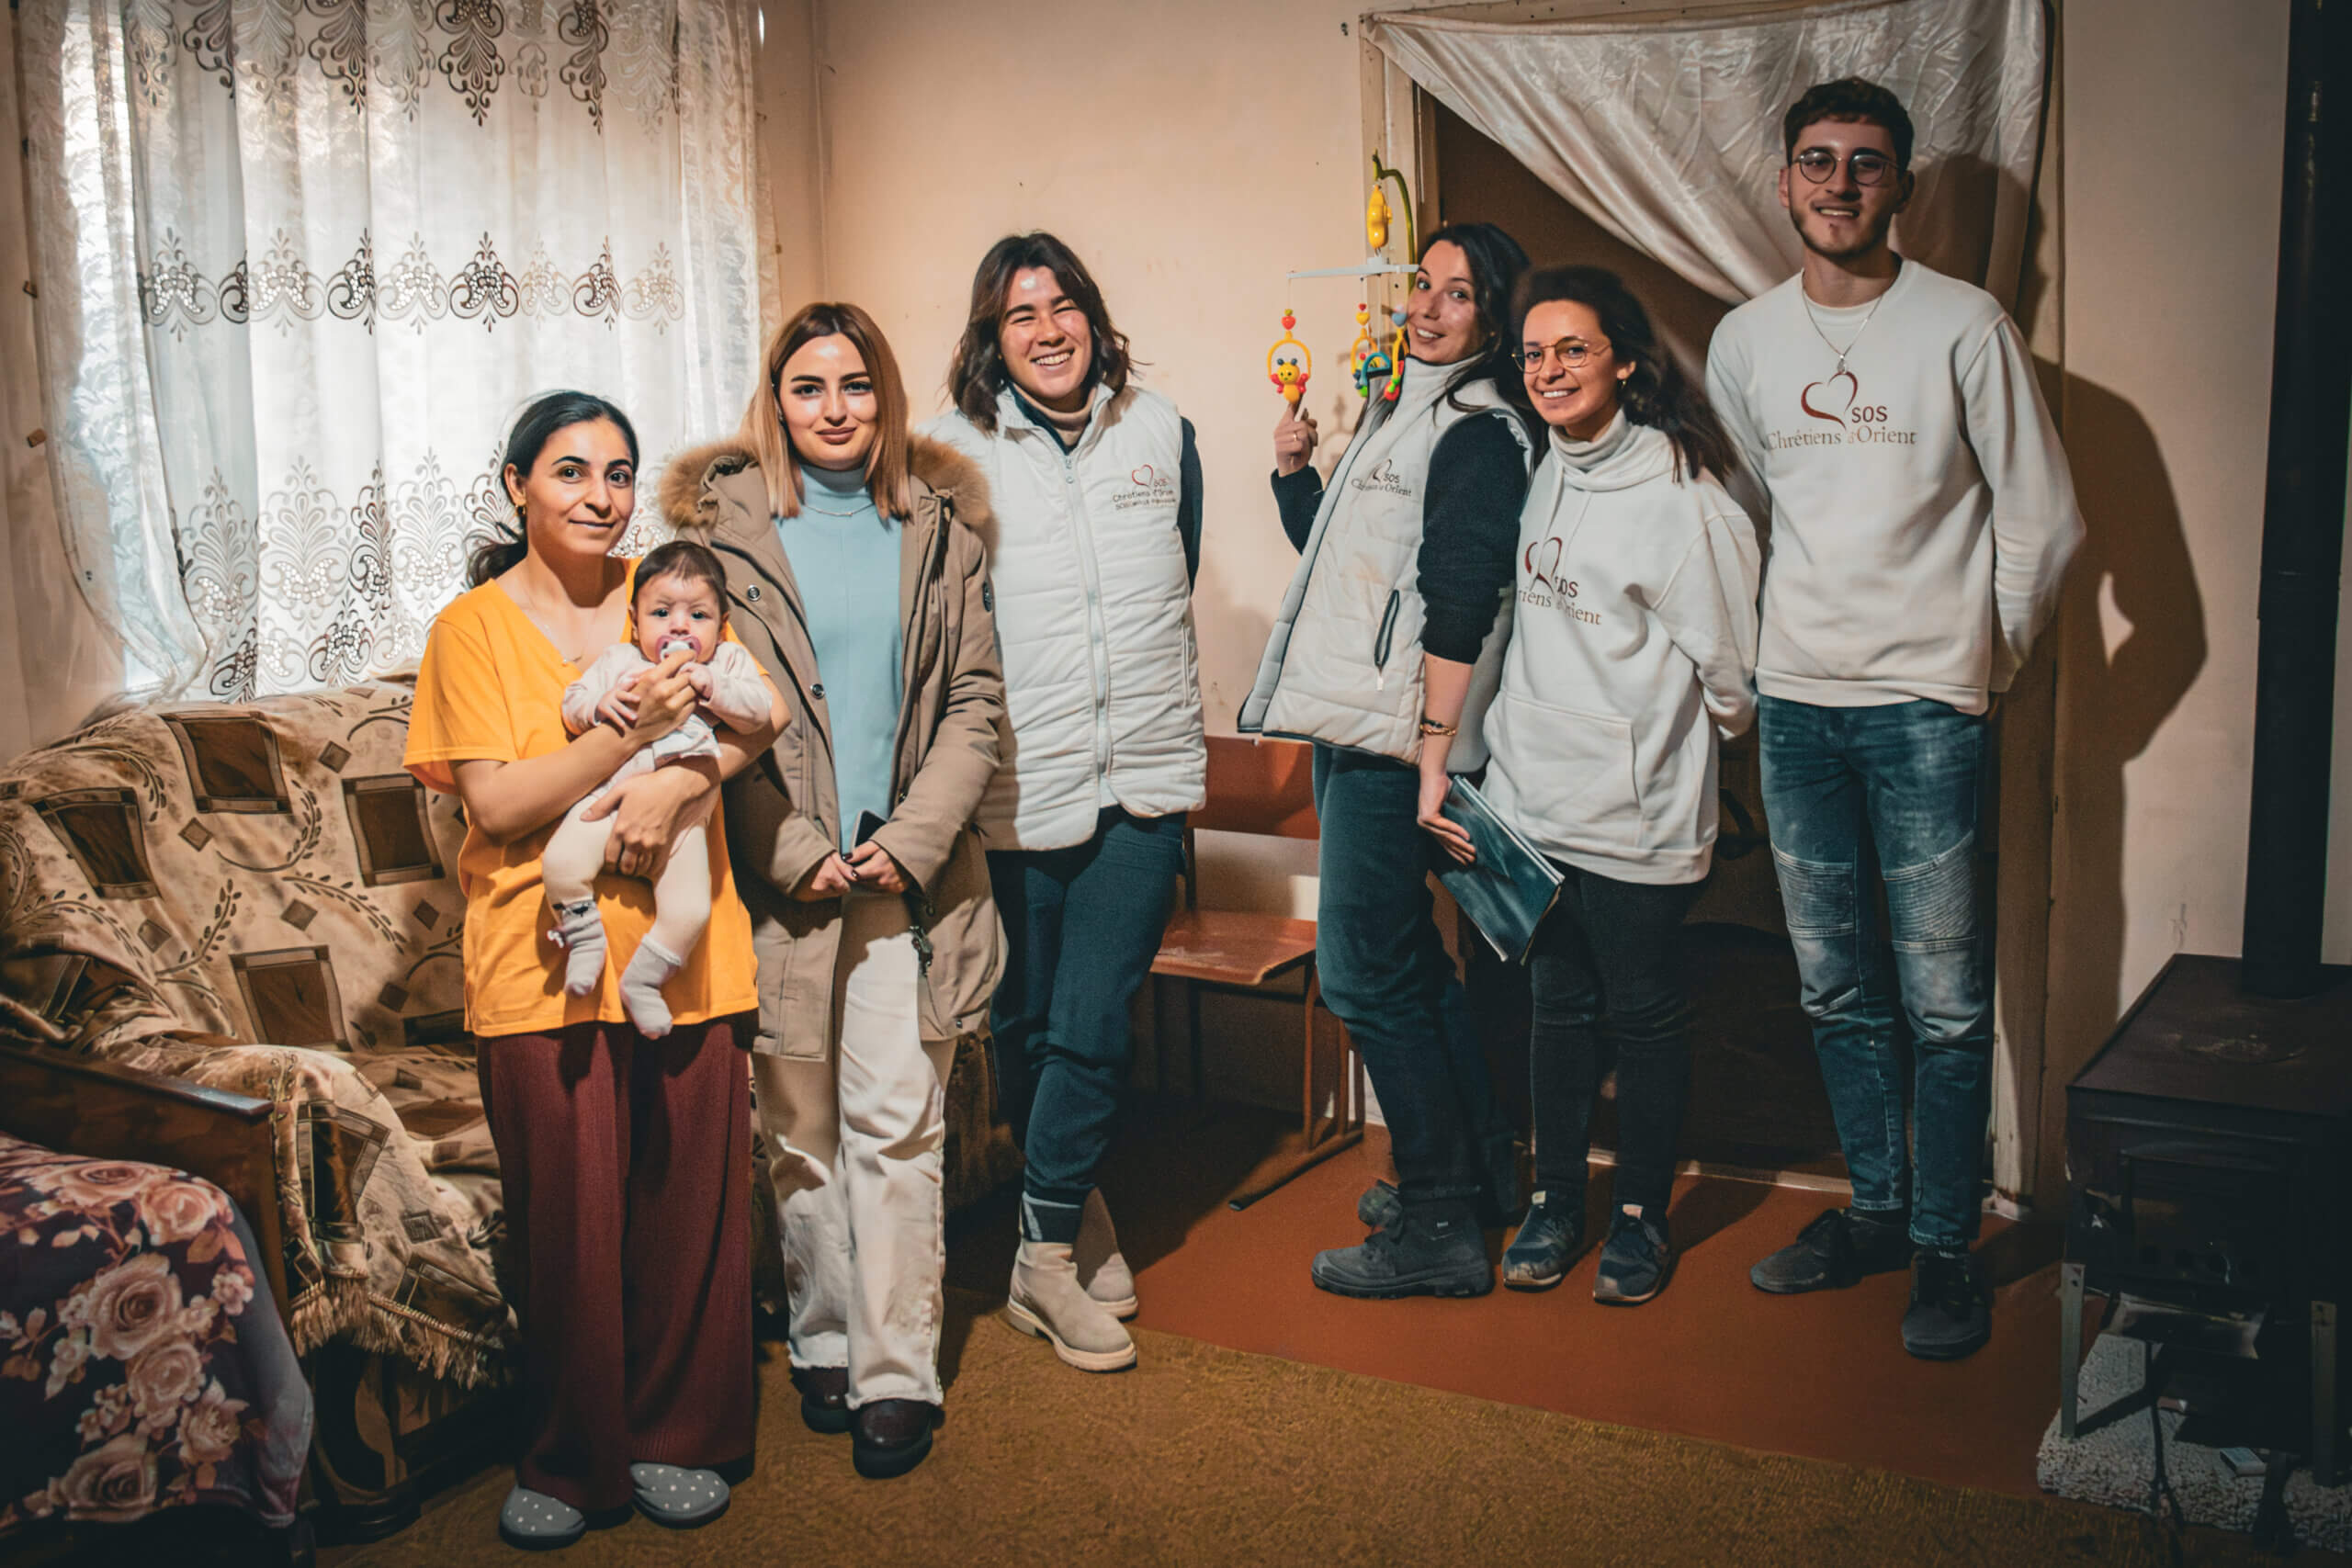 sos-chretiens-orient-armenie-volontaires-et-famille-deplacee-artsakh-visite